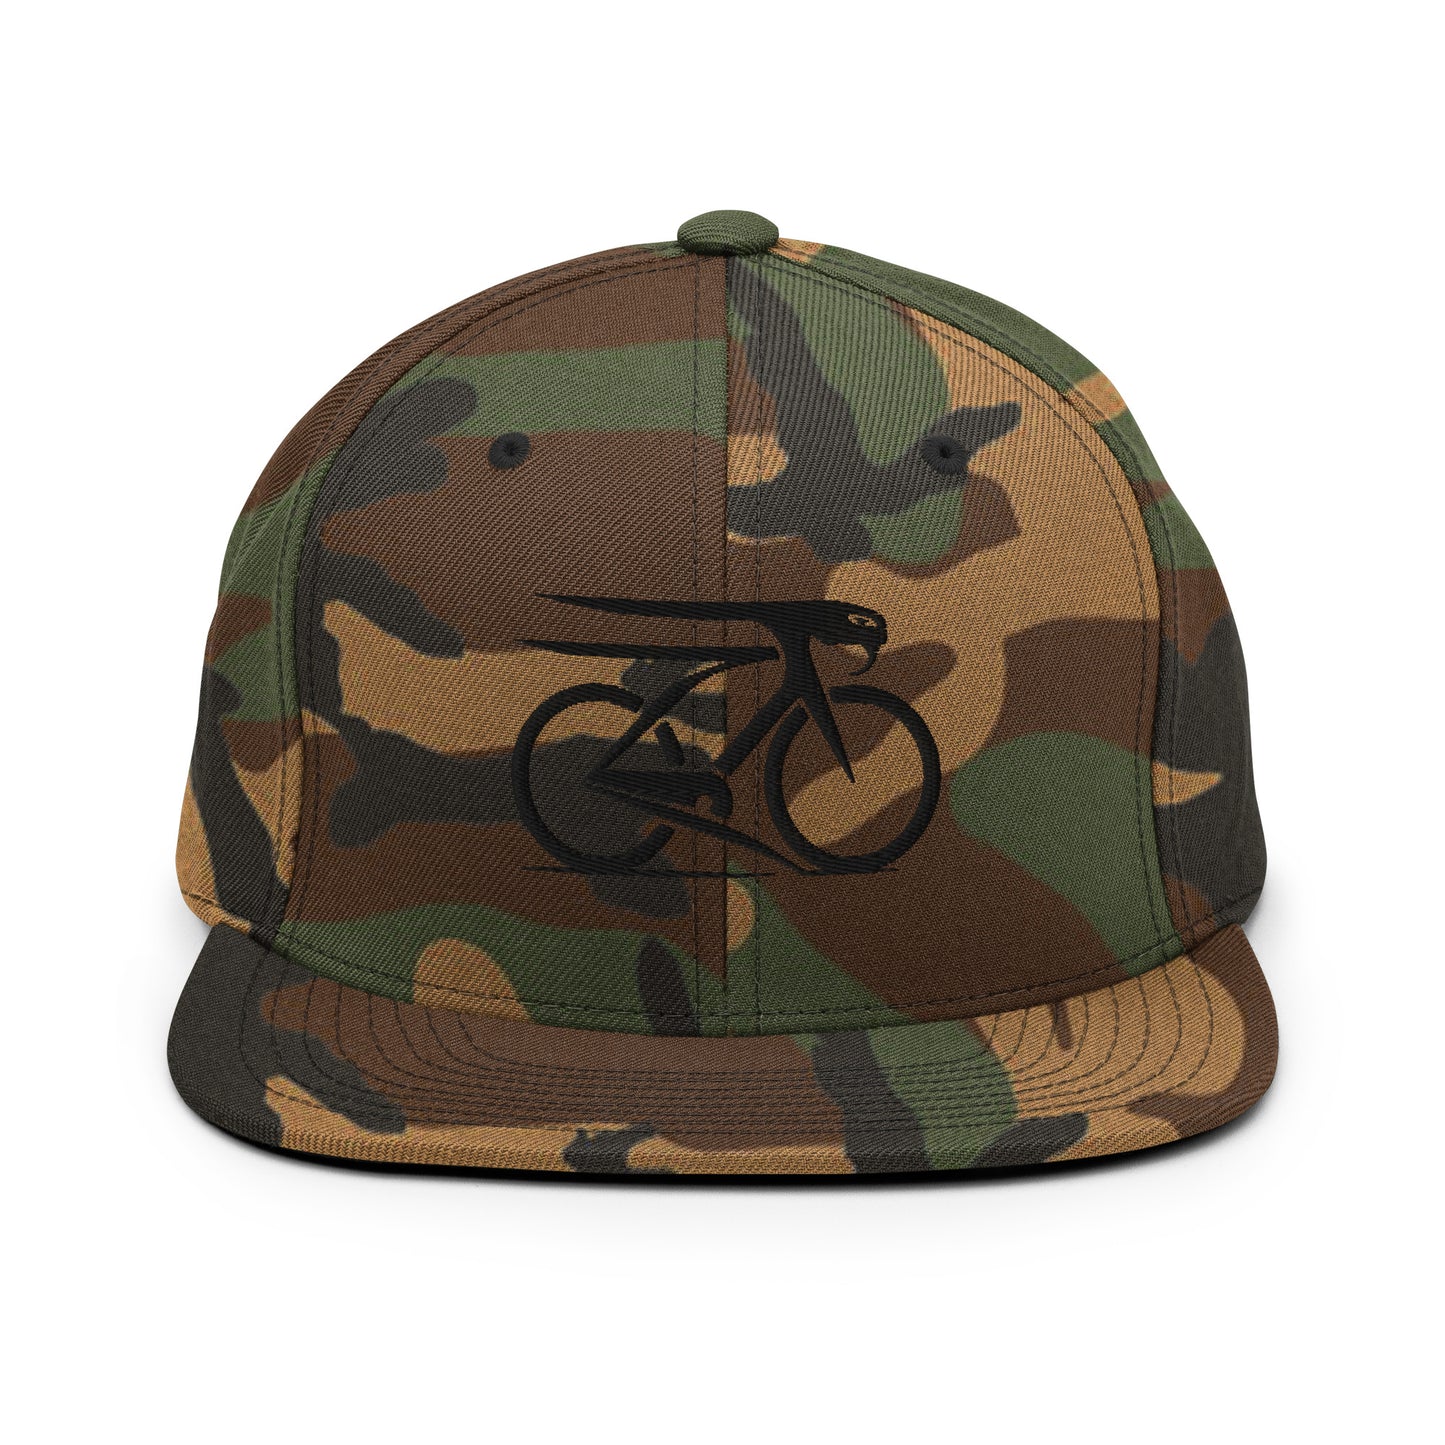 Cobra Bike 3D Puff Embroidered Snapback Hat